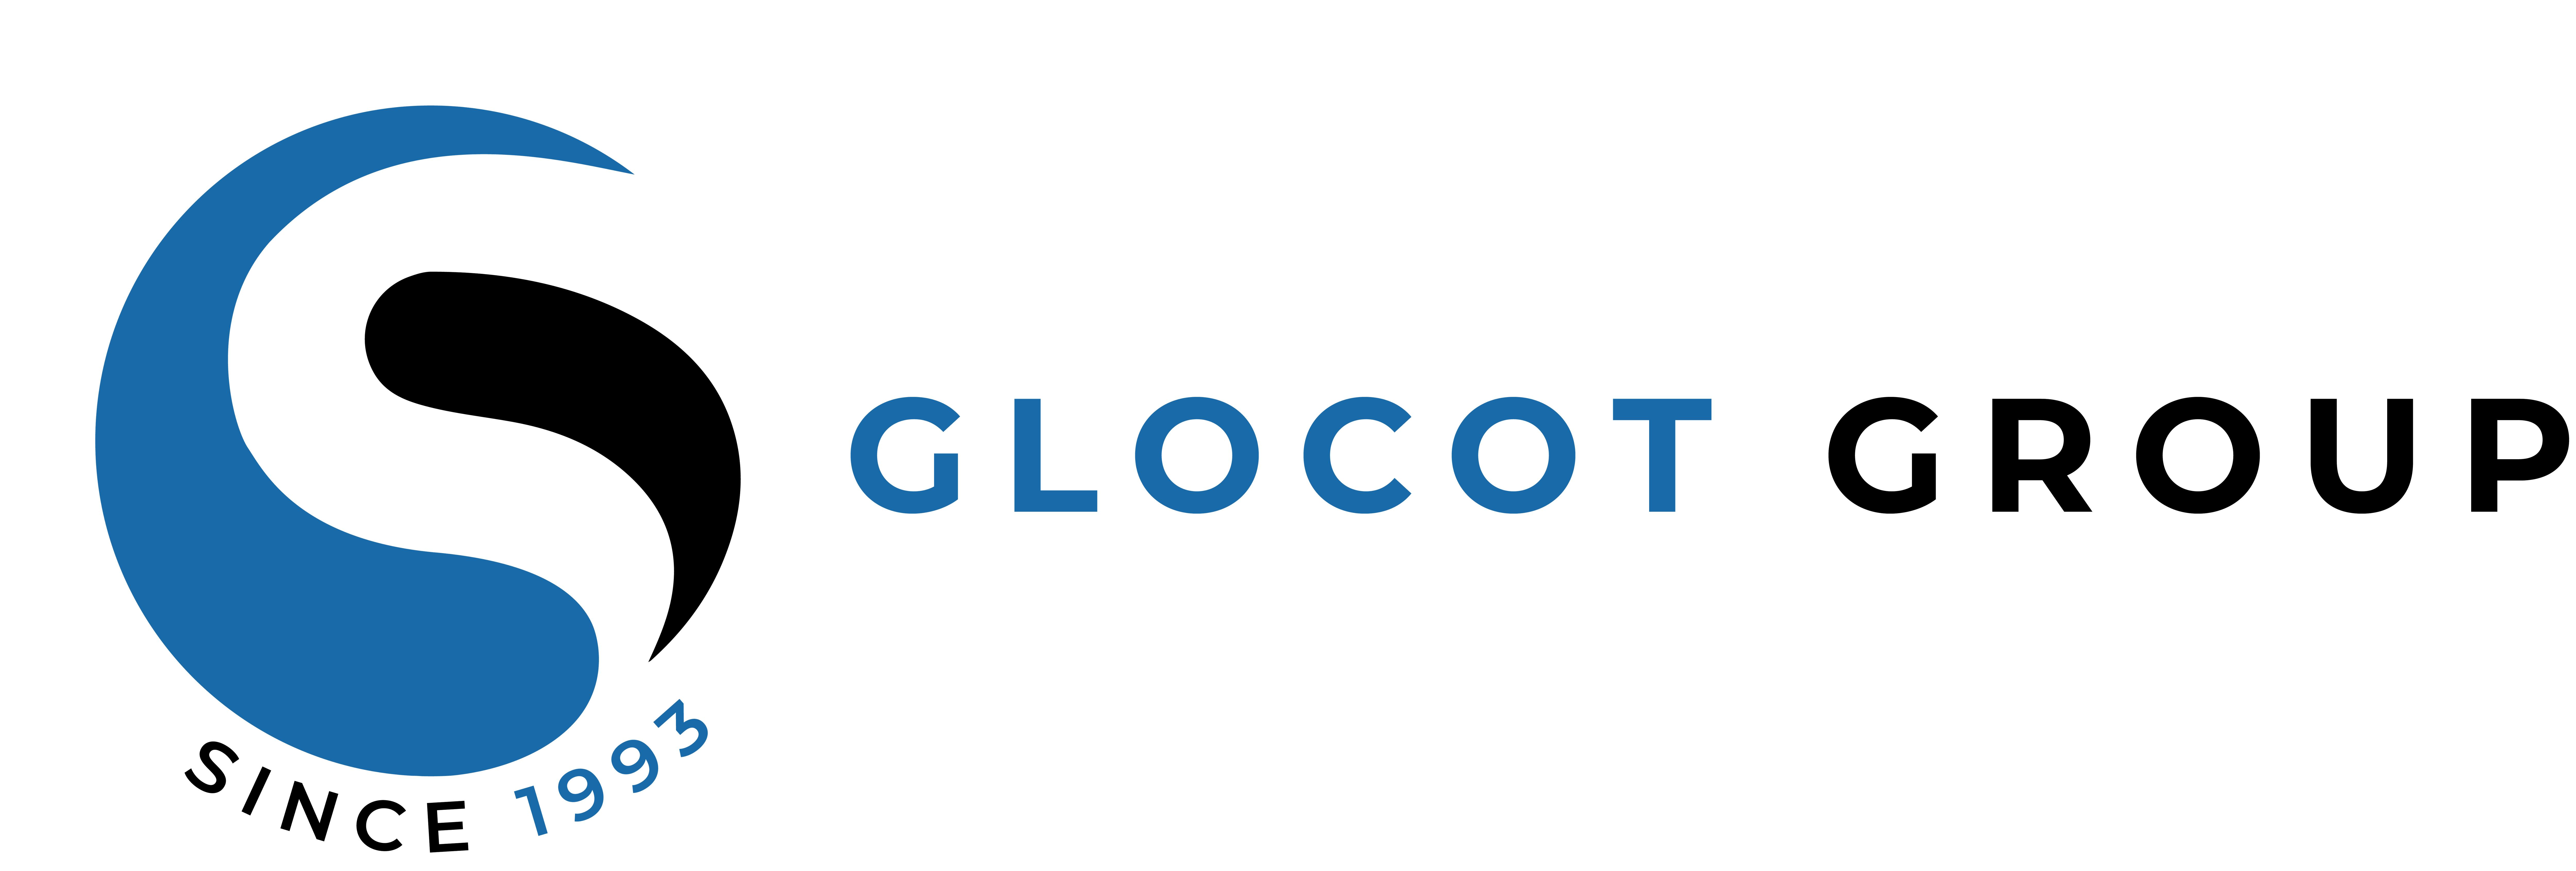 Glocot Group